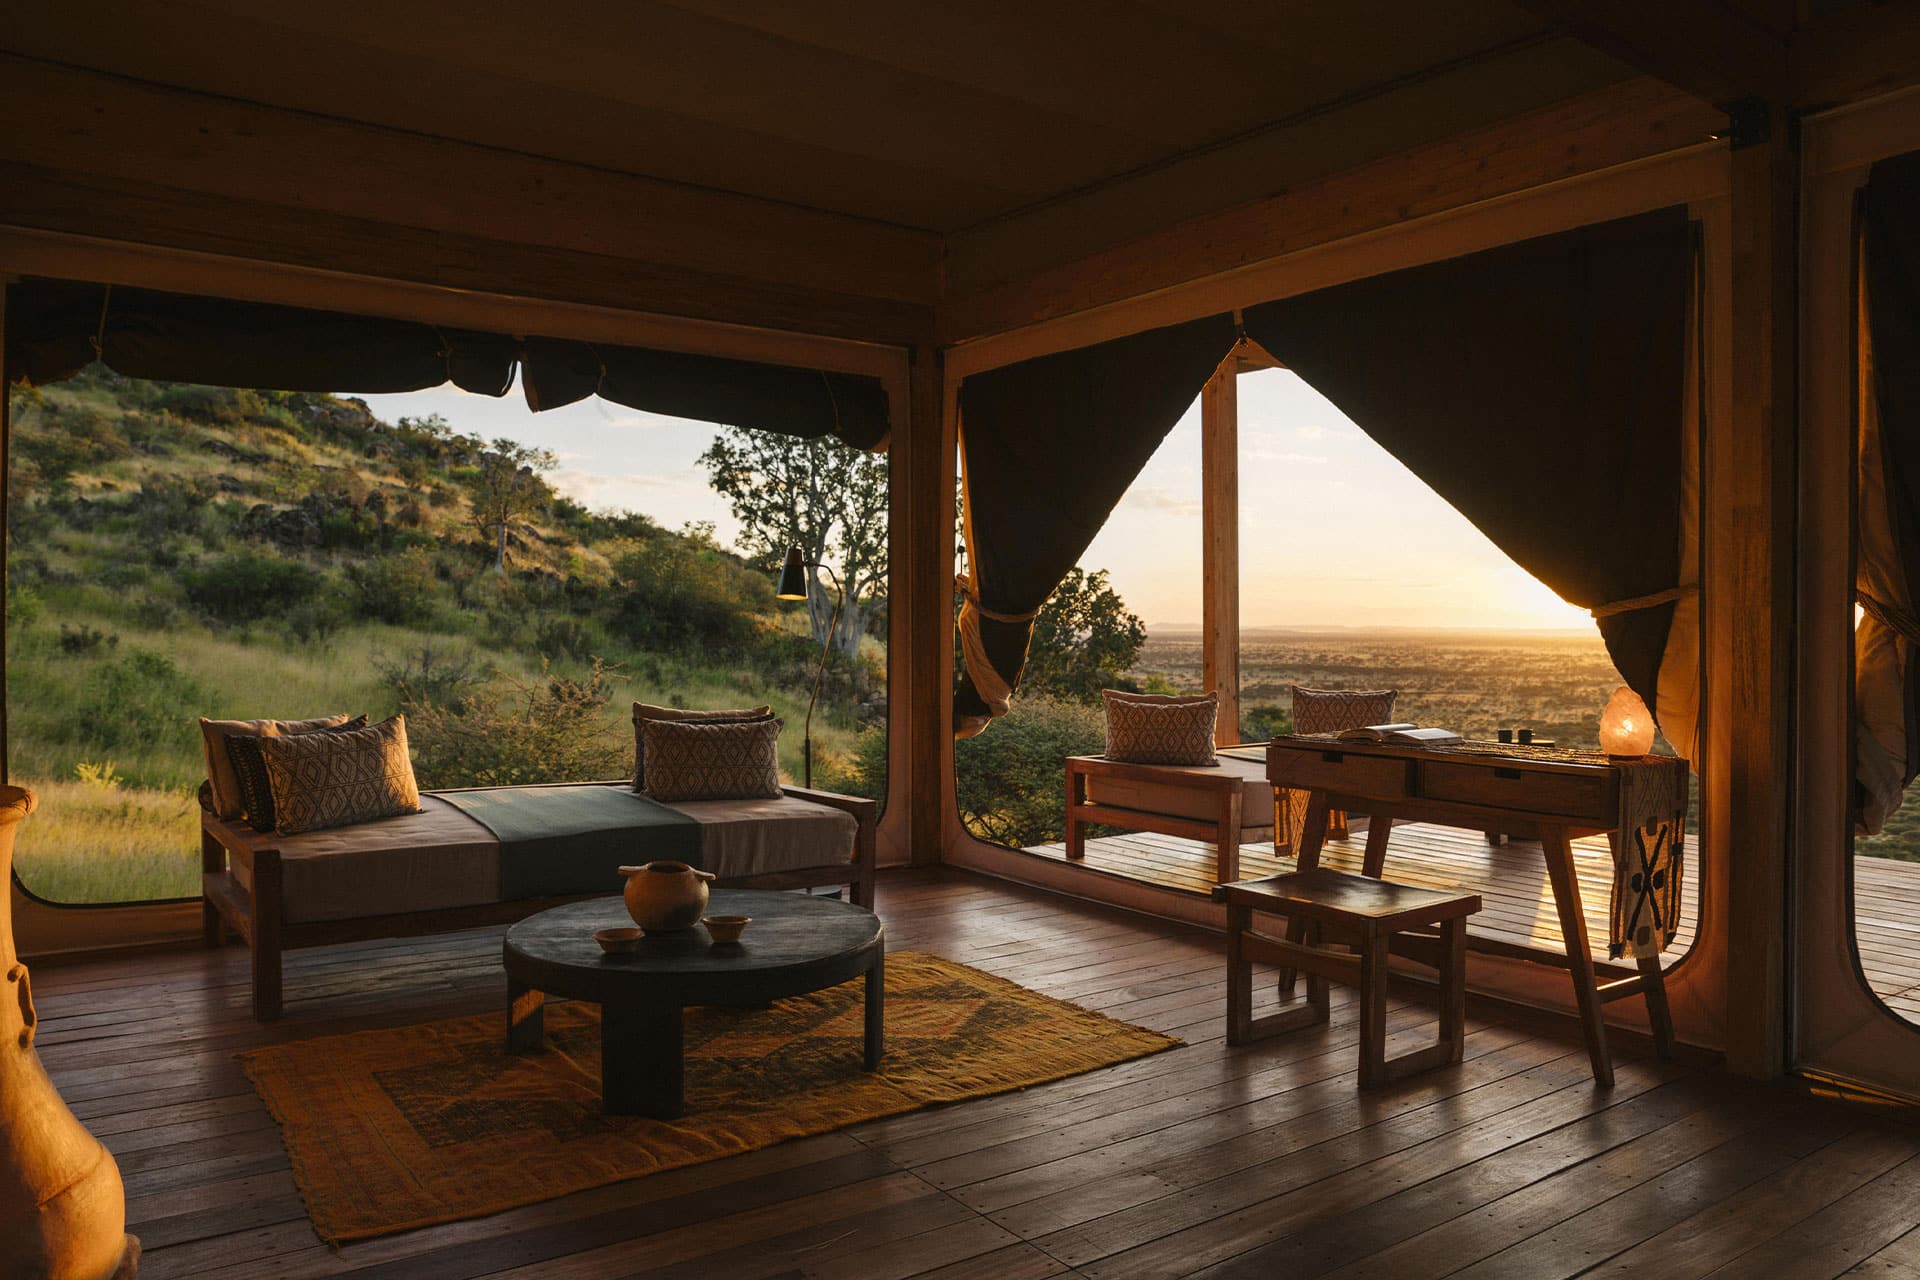 Seating area at Habitas Namibia with views of the savannah plains.